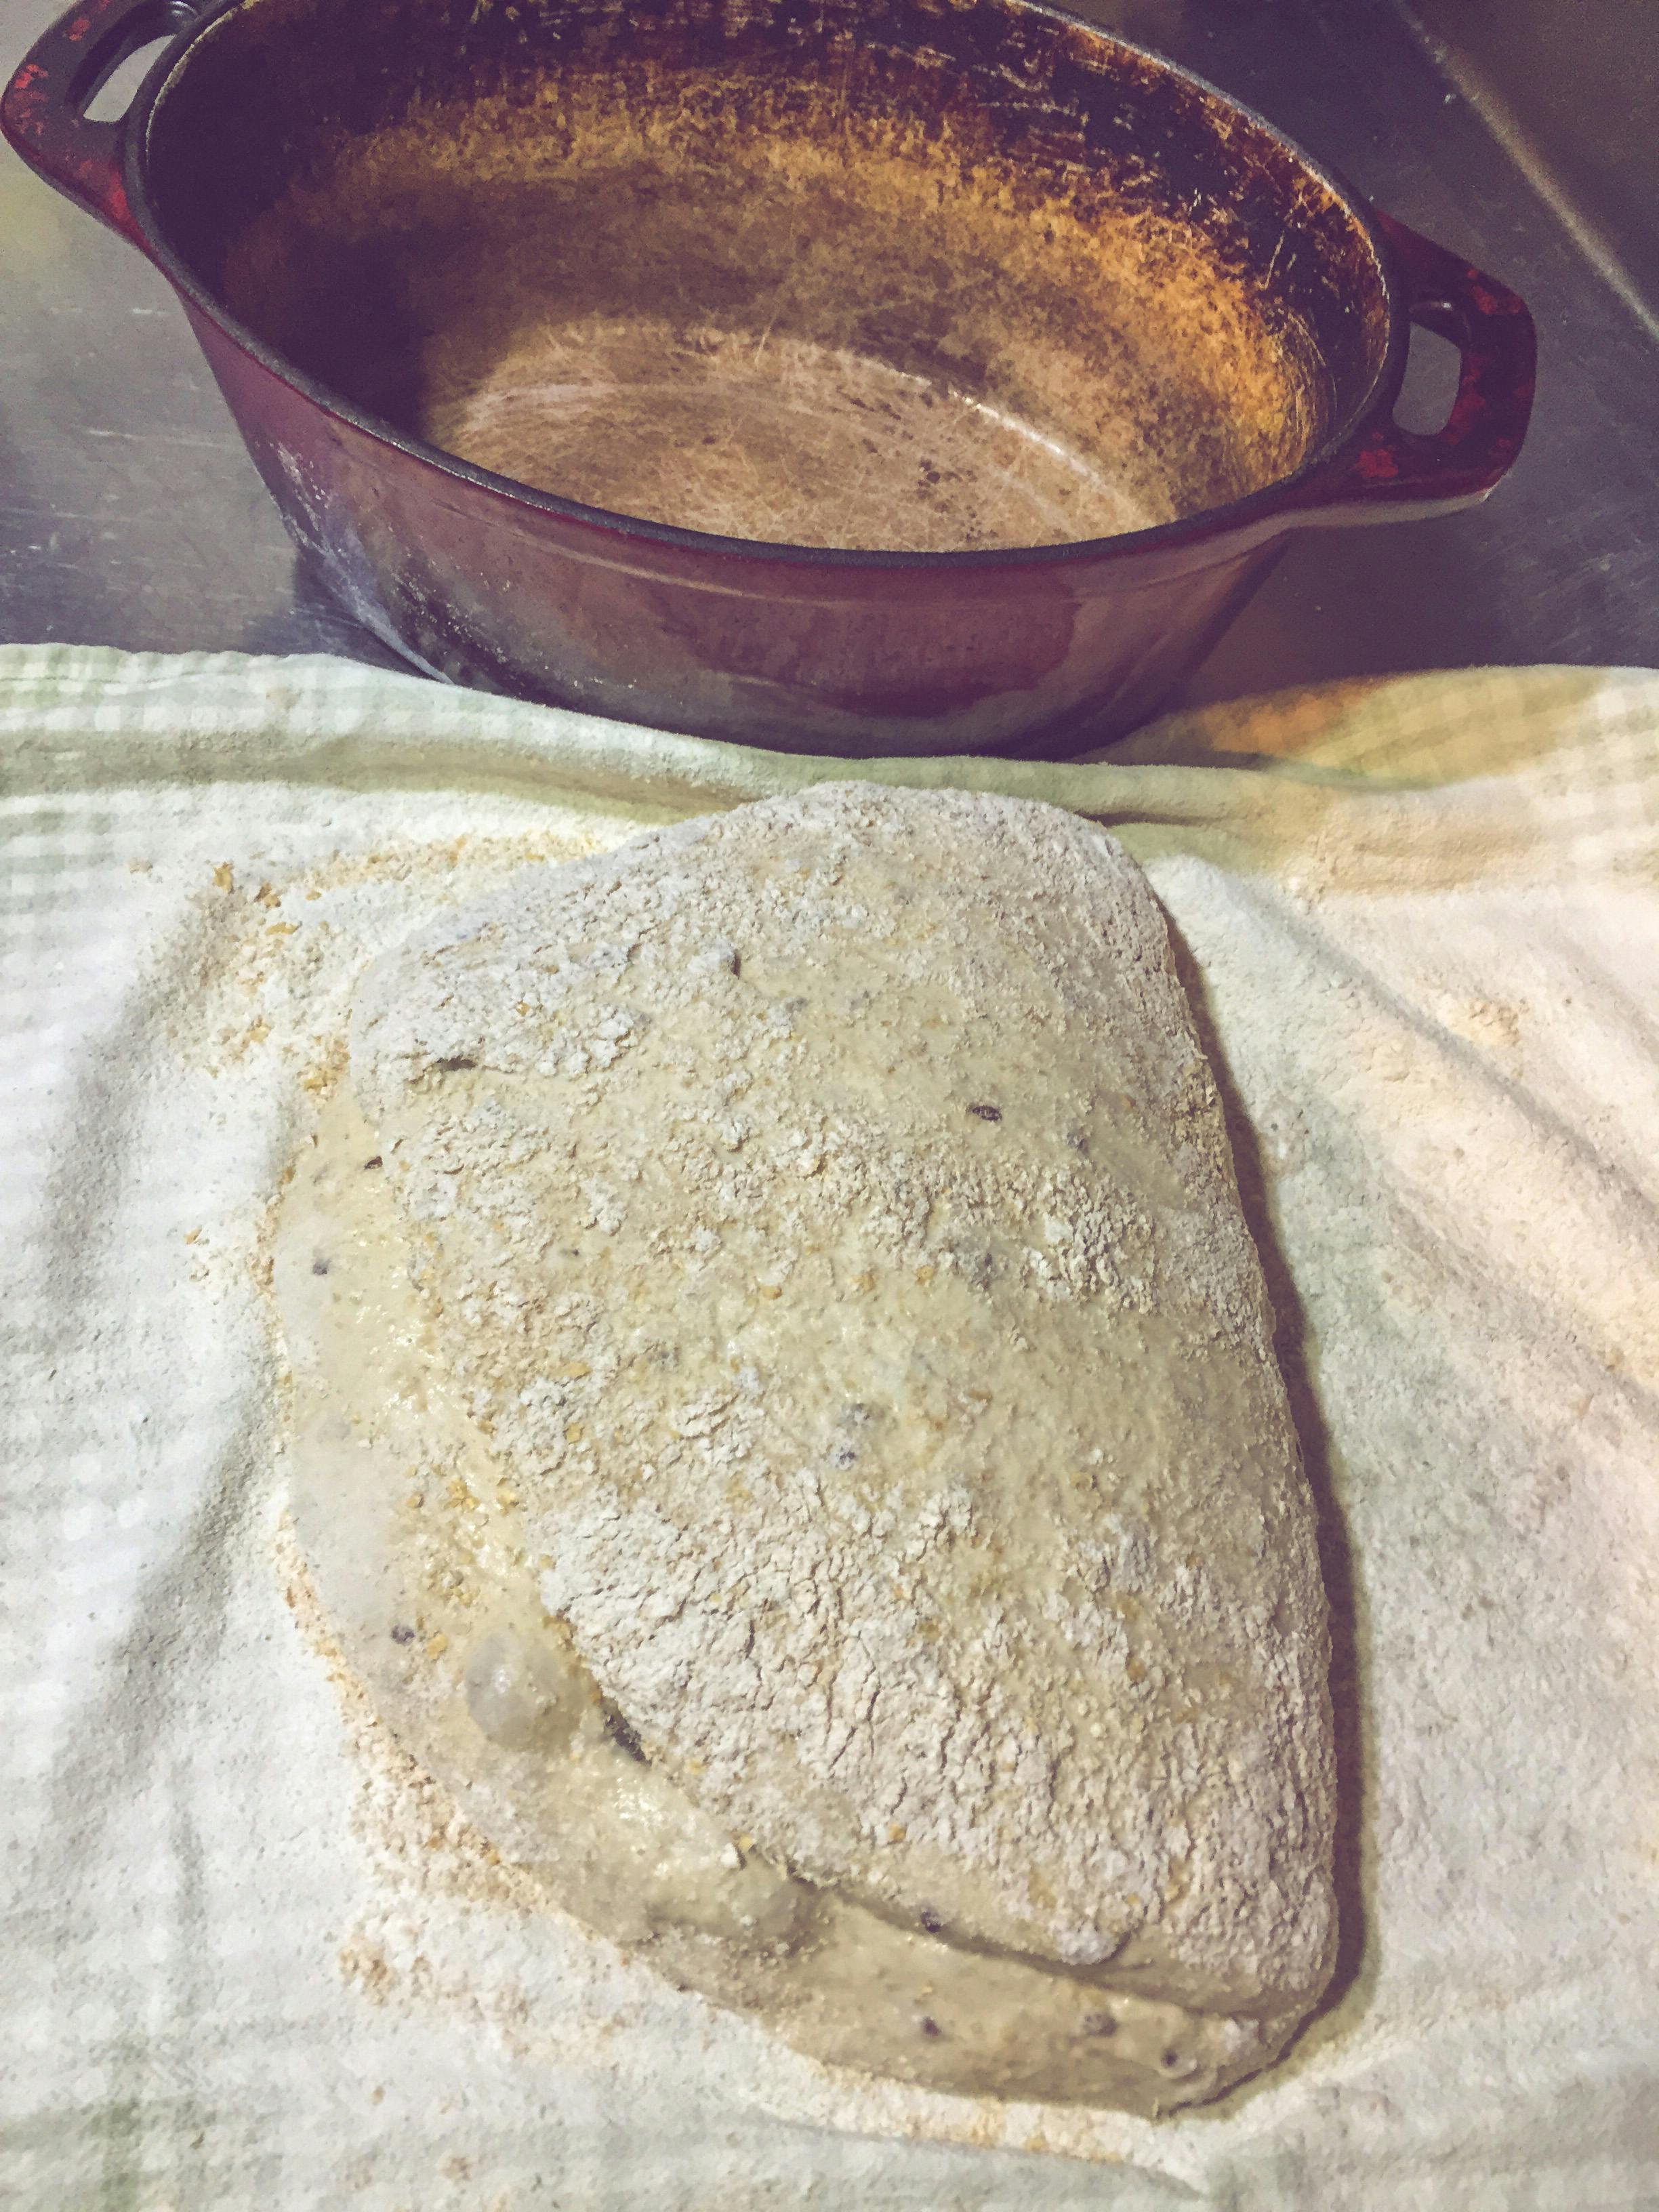 Tongariro Crossing Lodge's artisan bread in the making